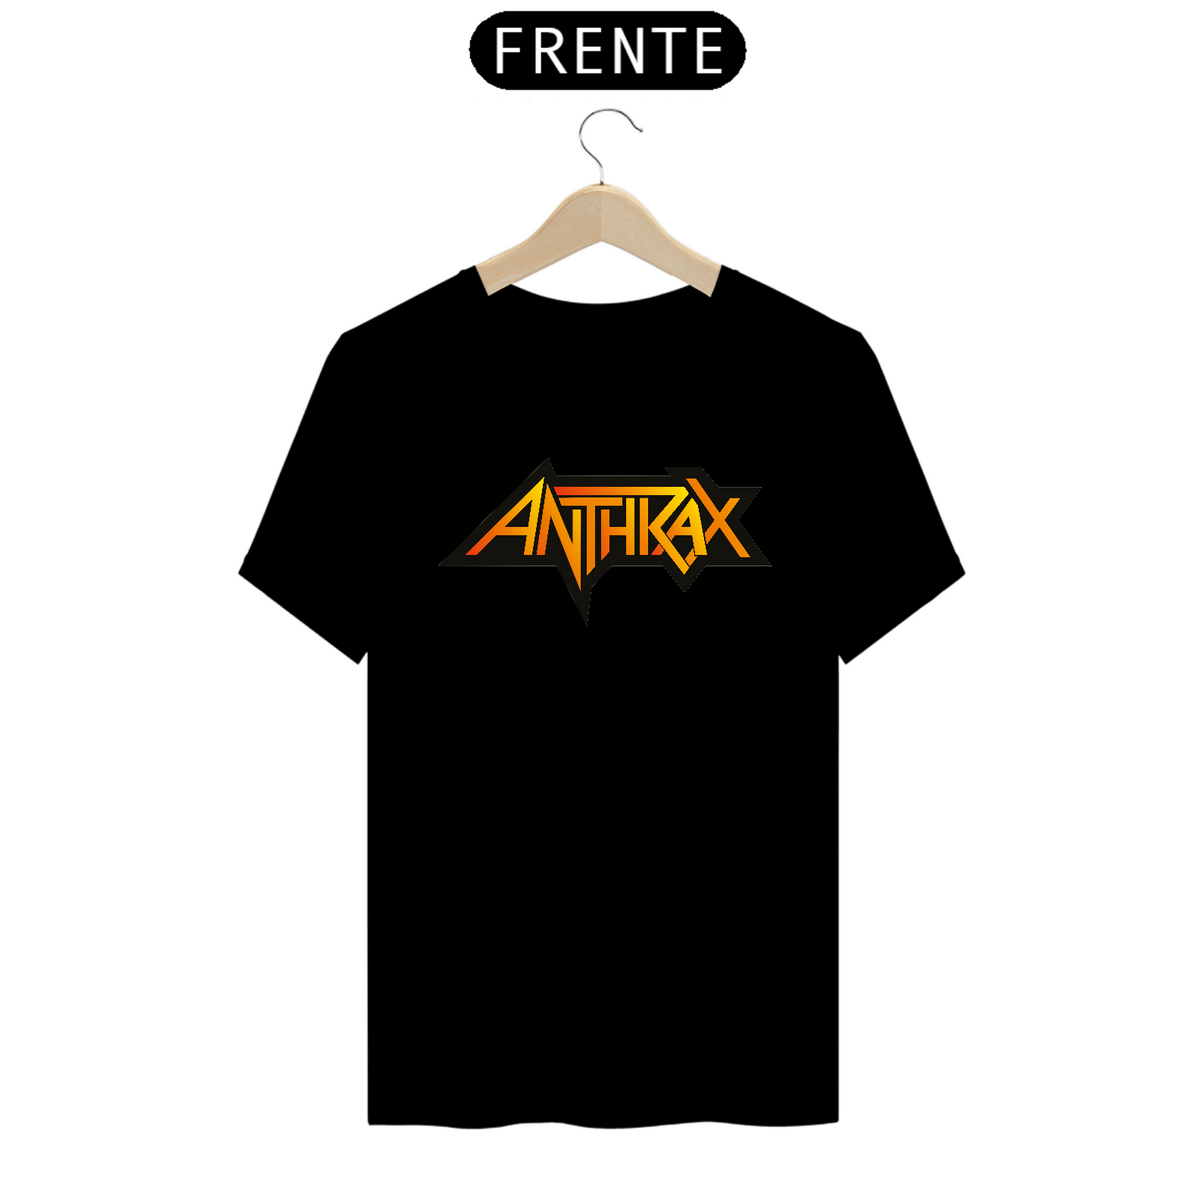 Nome do produto: Anthrax